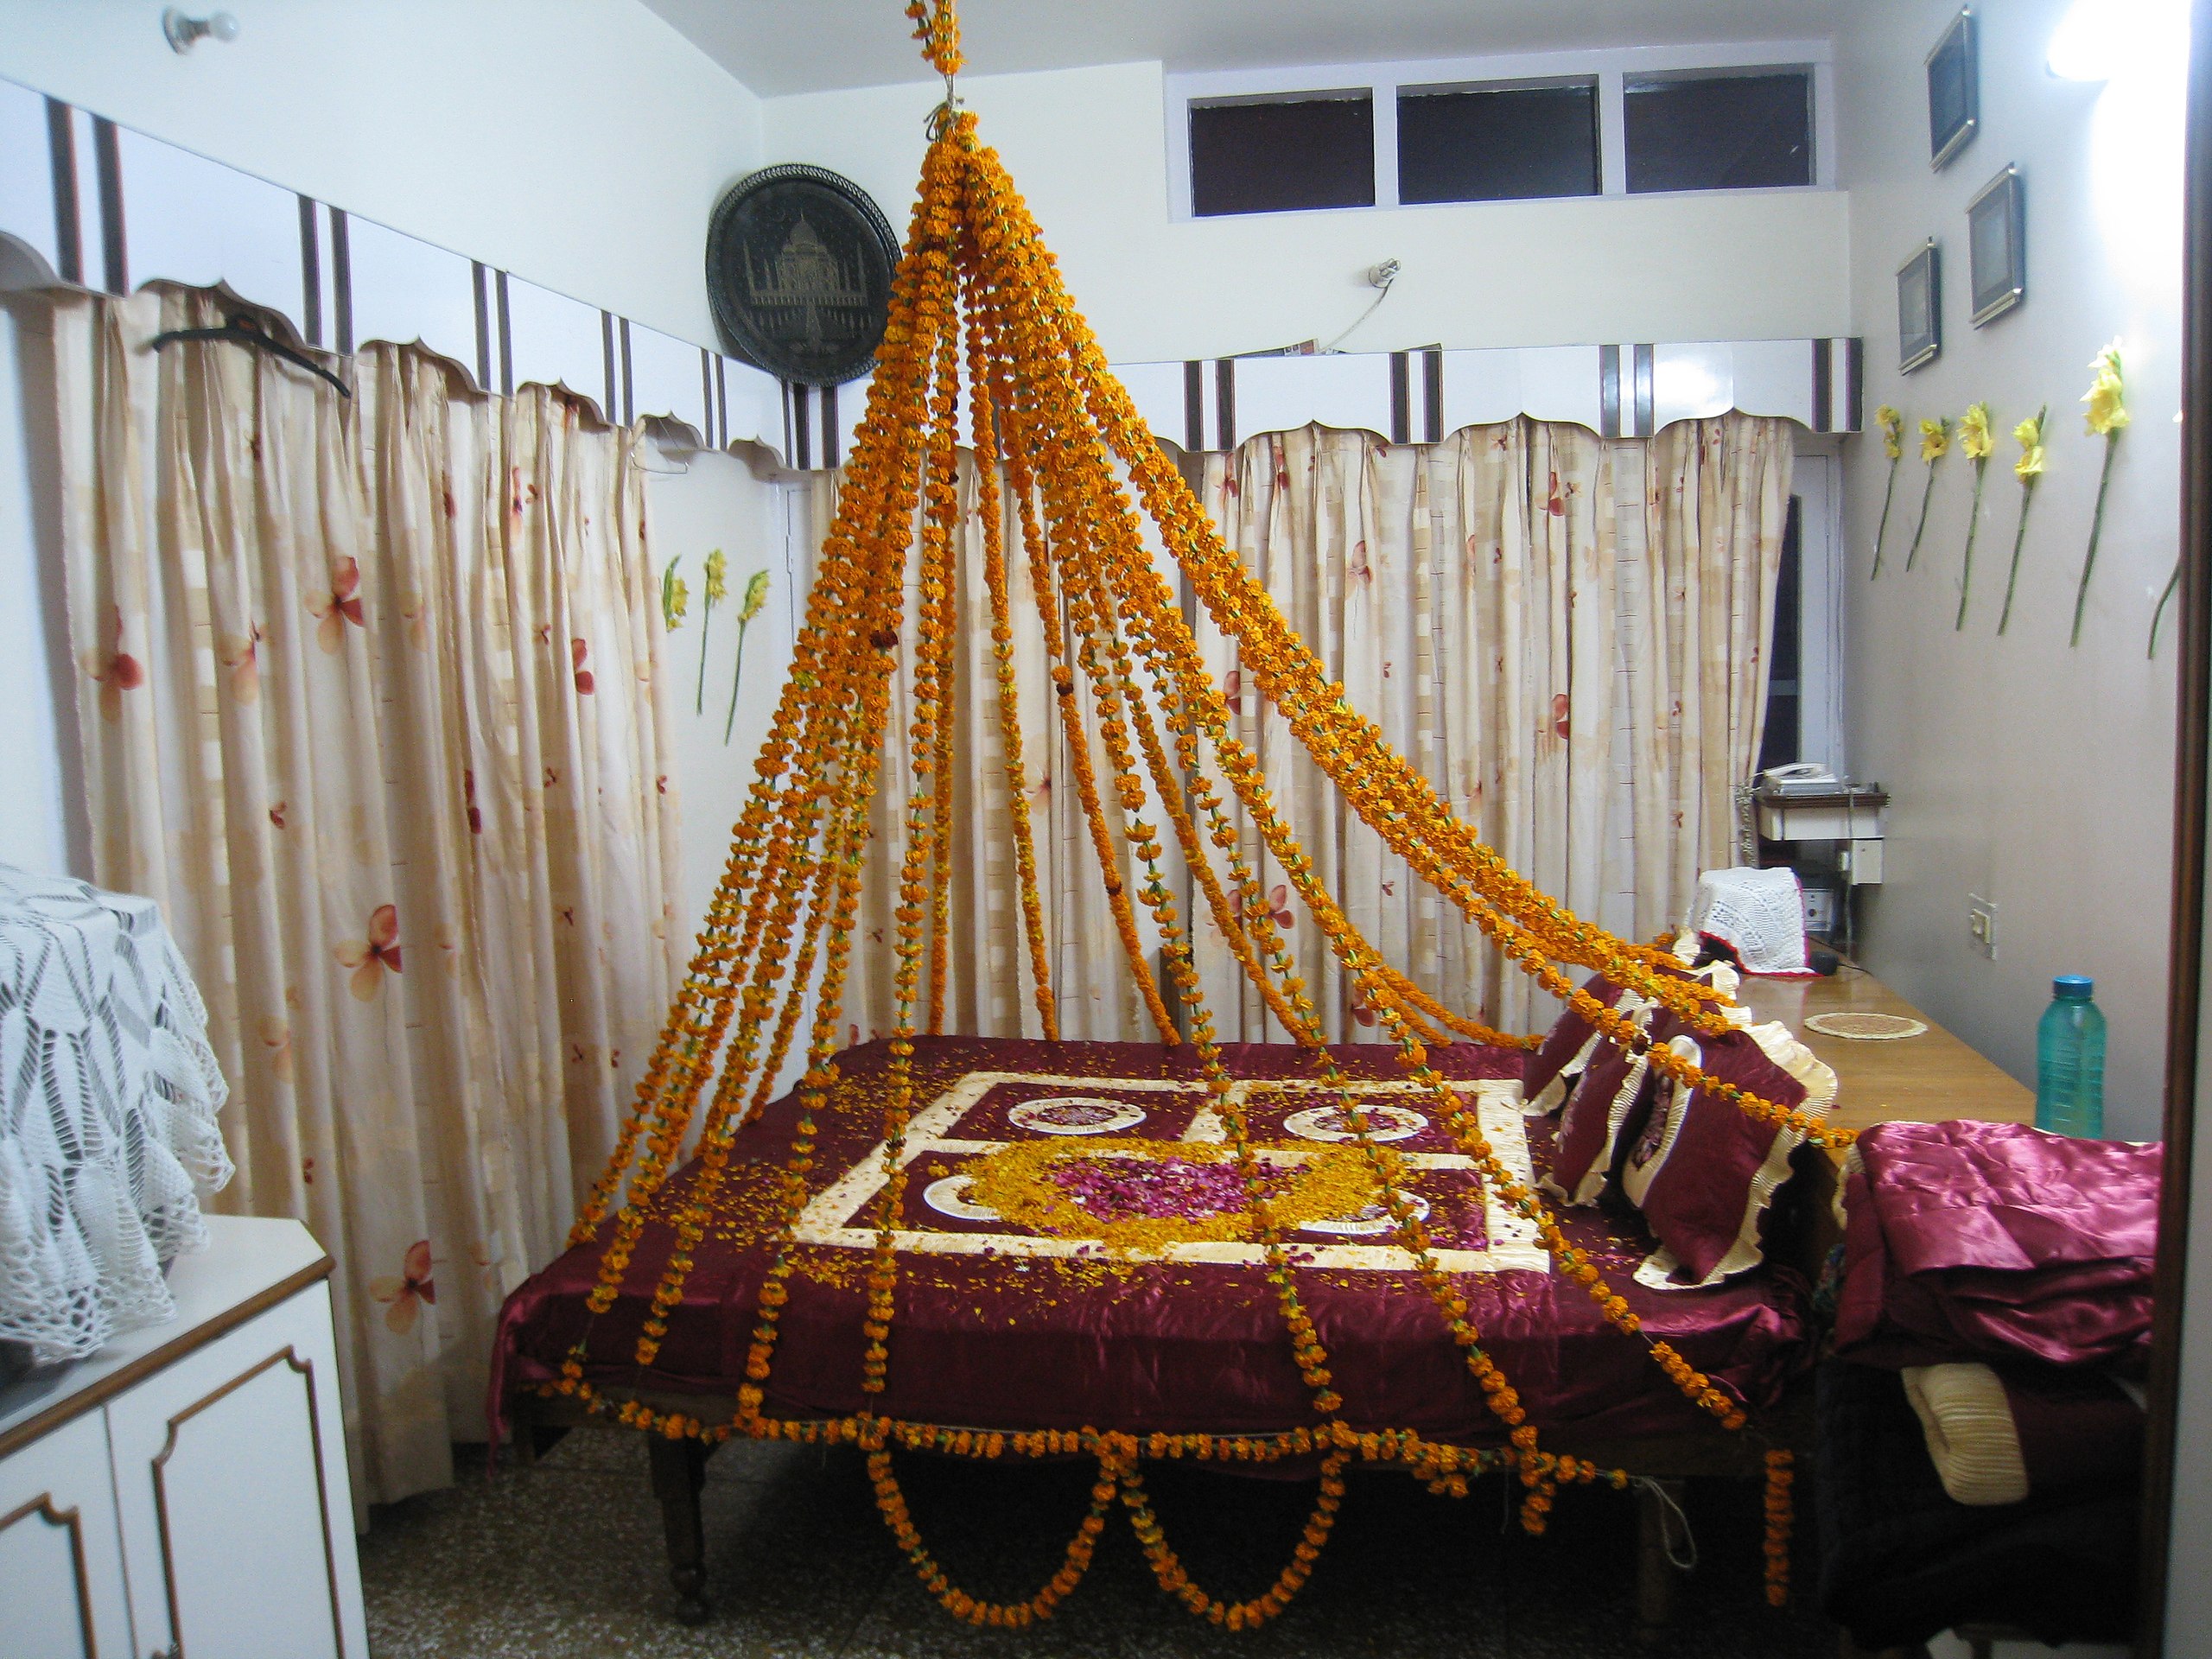 2560px-Flower-bed-indian-wedding.jpg